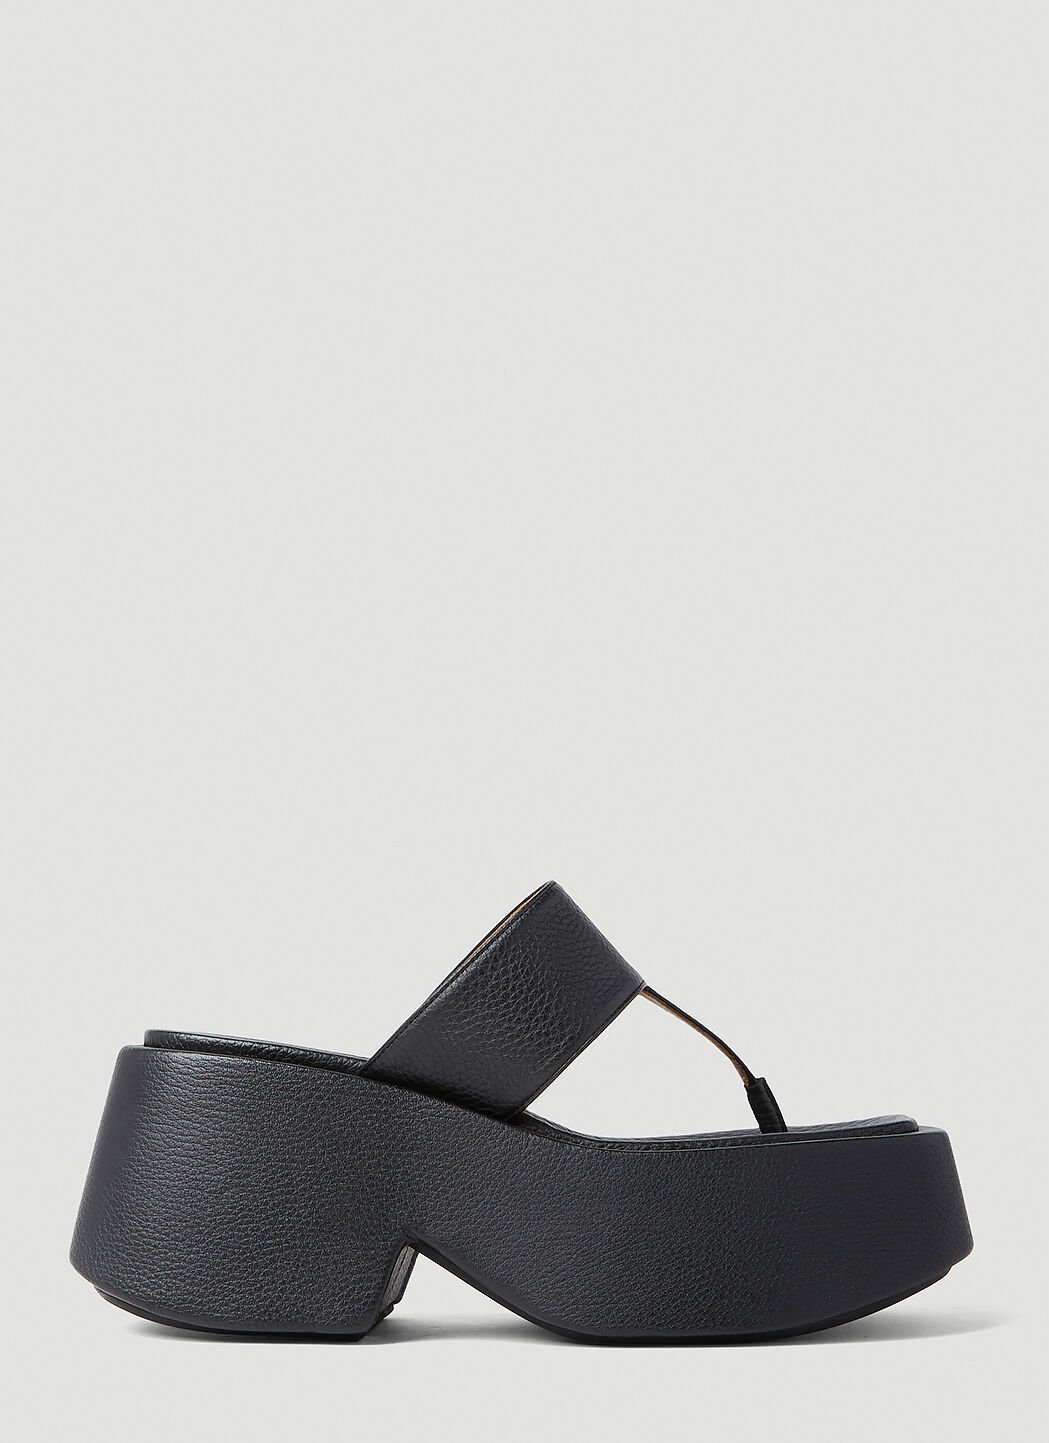 Balenciaga Zeppo Platform Sandals Black bal0252062